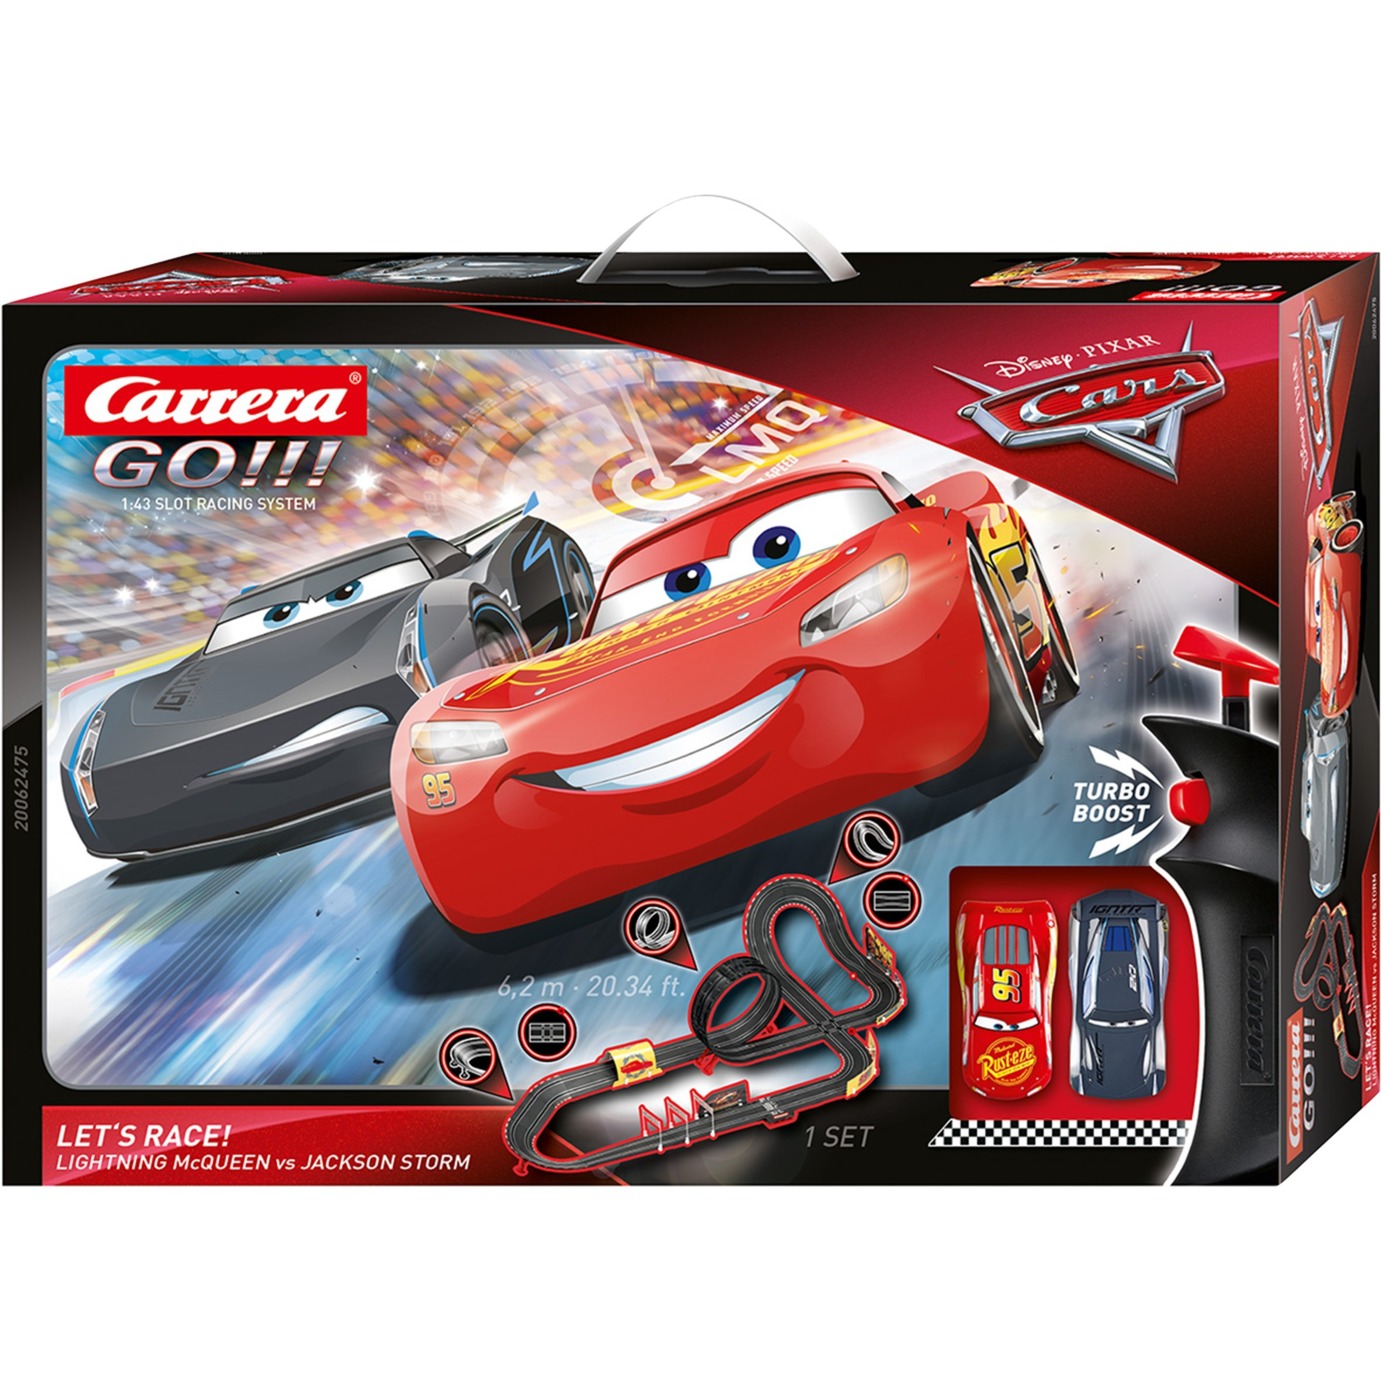 Spielzeug: Carrera GO!!! Disney Pixar Cars - Let''s Race!, Rennbahn